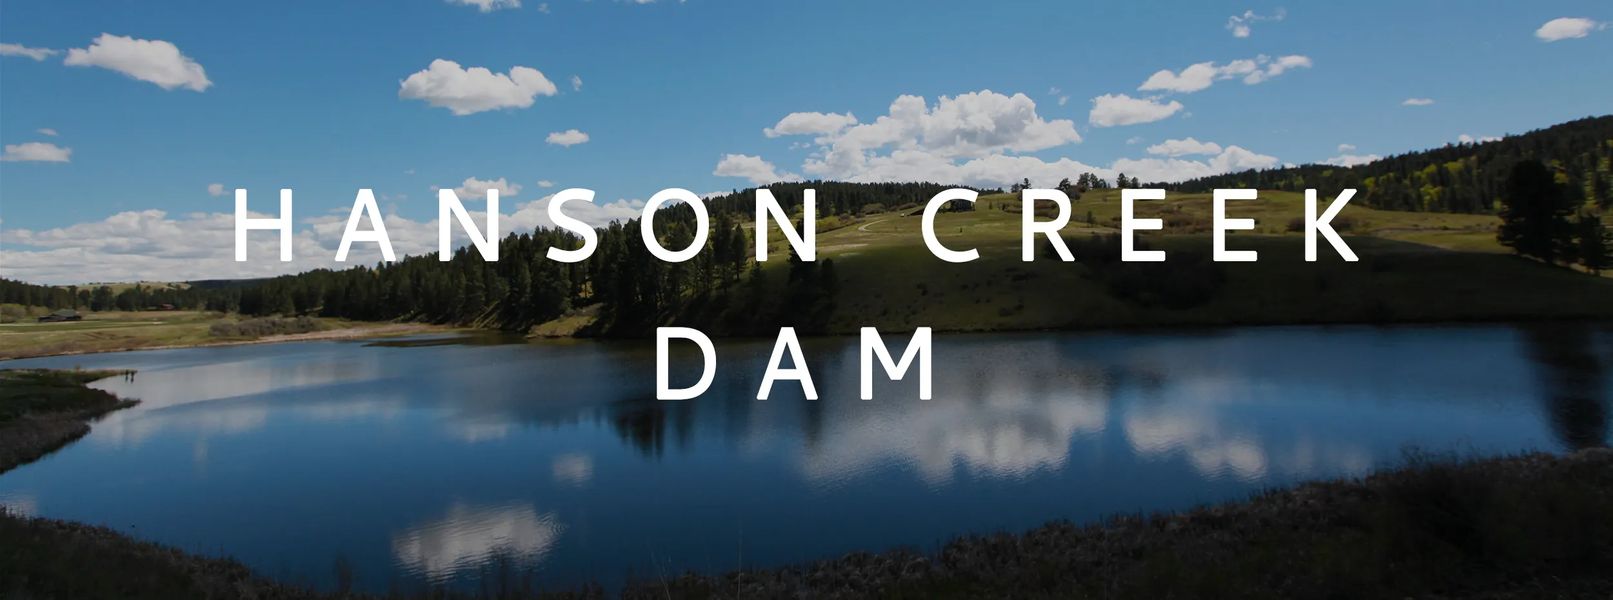 Hanson Creek Dam